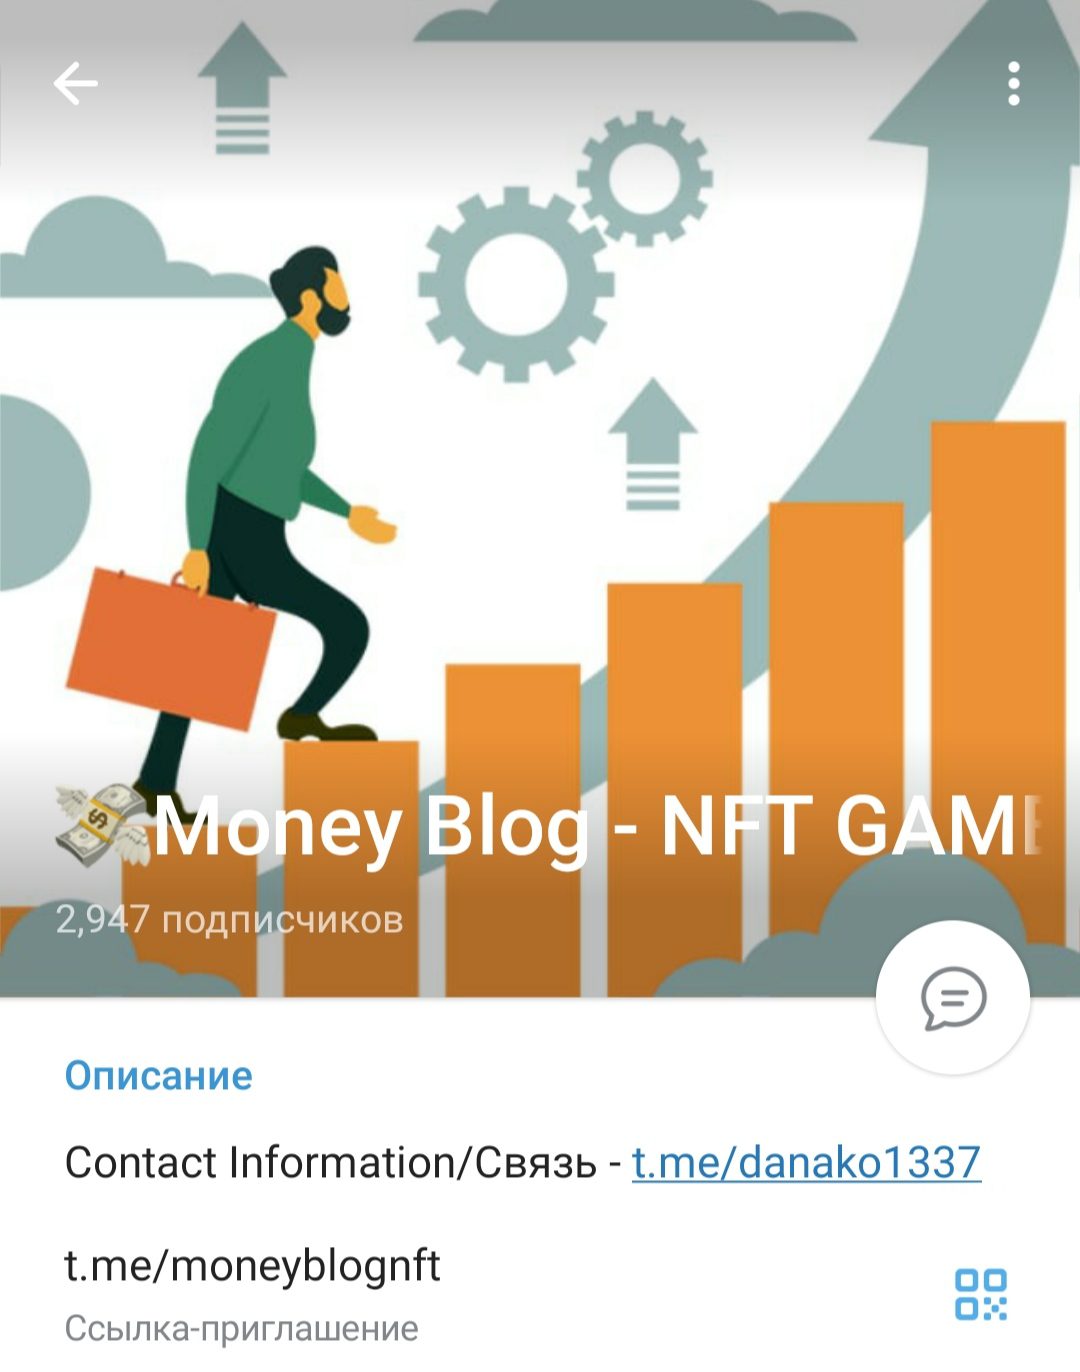 Money Blog телеграмм